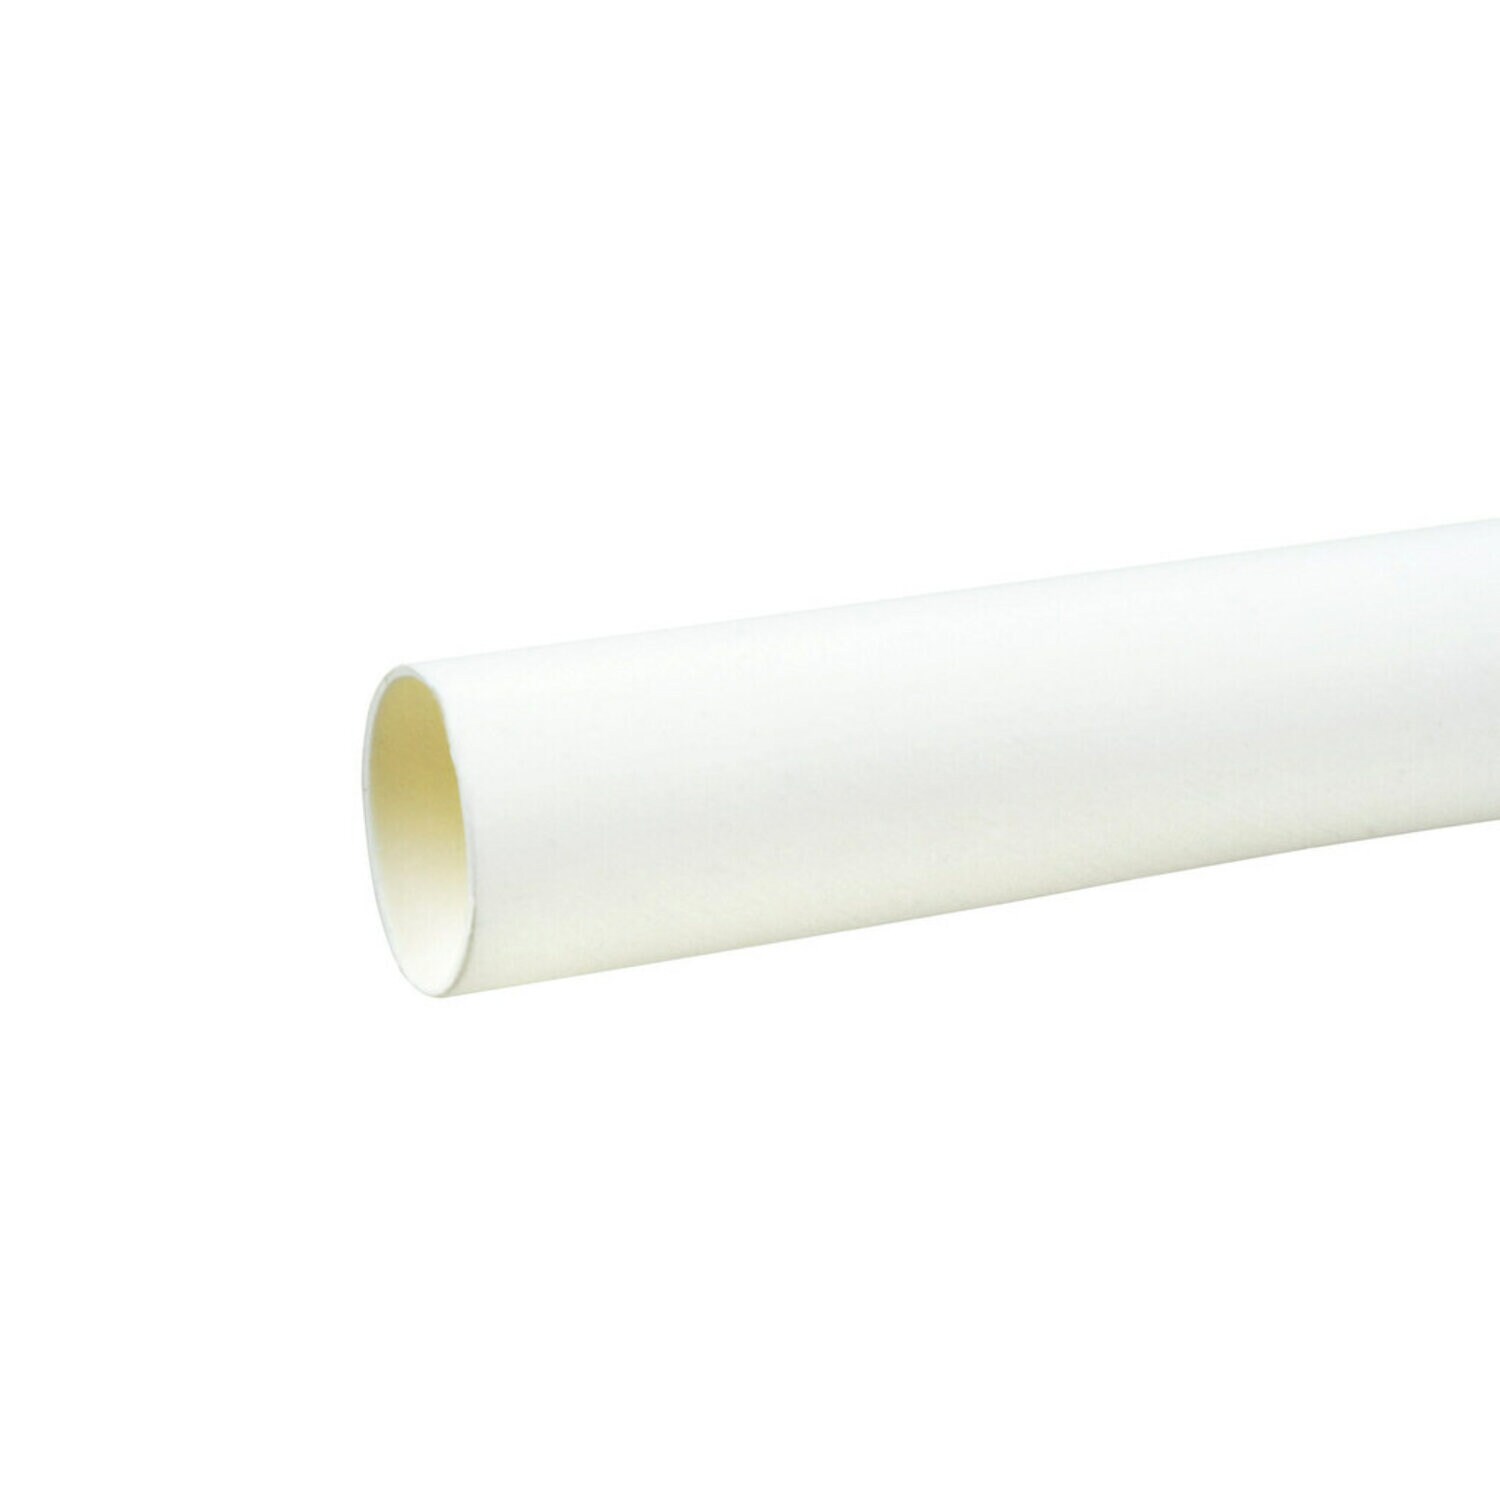 7010349738 - 3M Heat Shrink Thin-Wall Tubing FP-301-1/2-White-200', 200 ft Length
per spool, 3 Rolls/Case